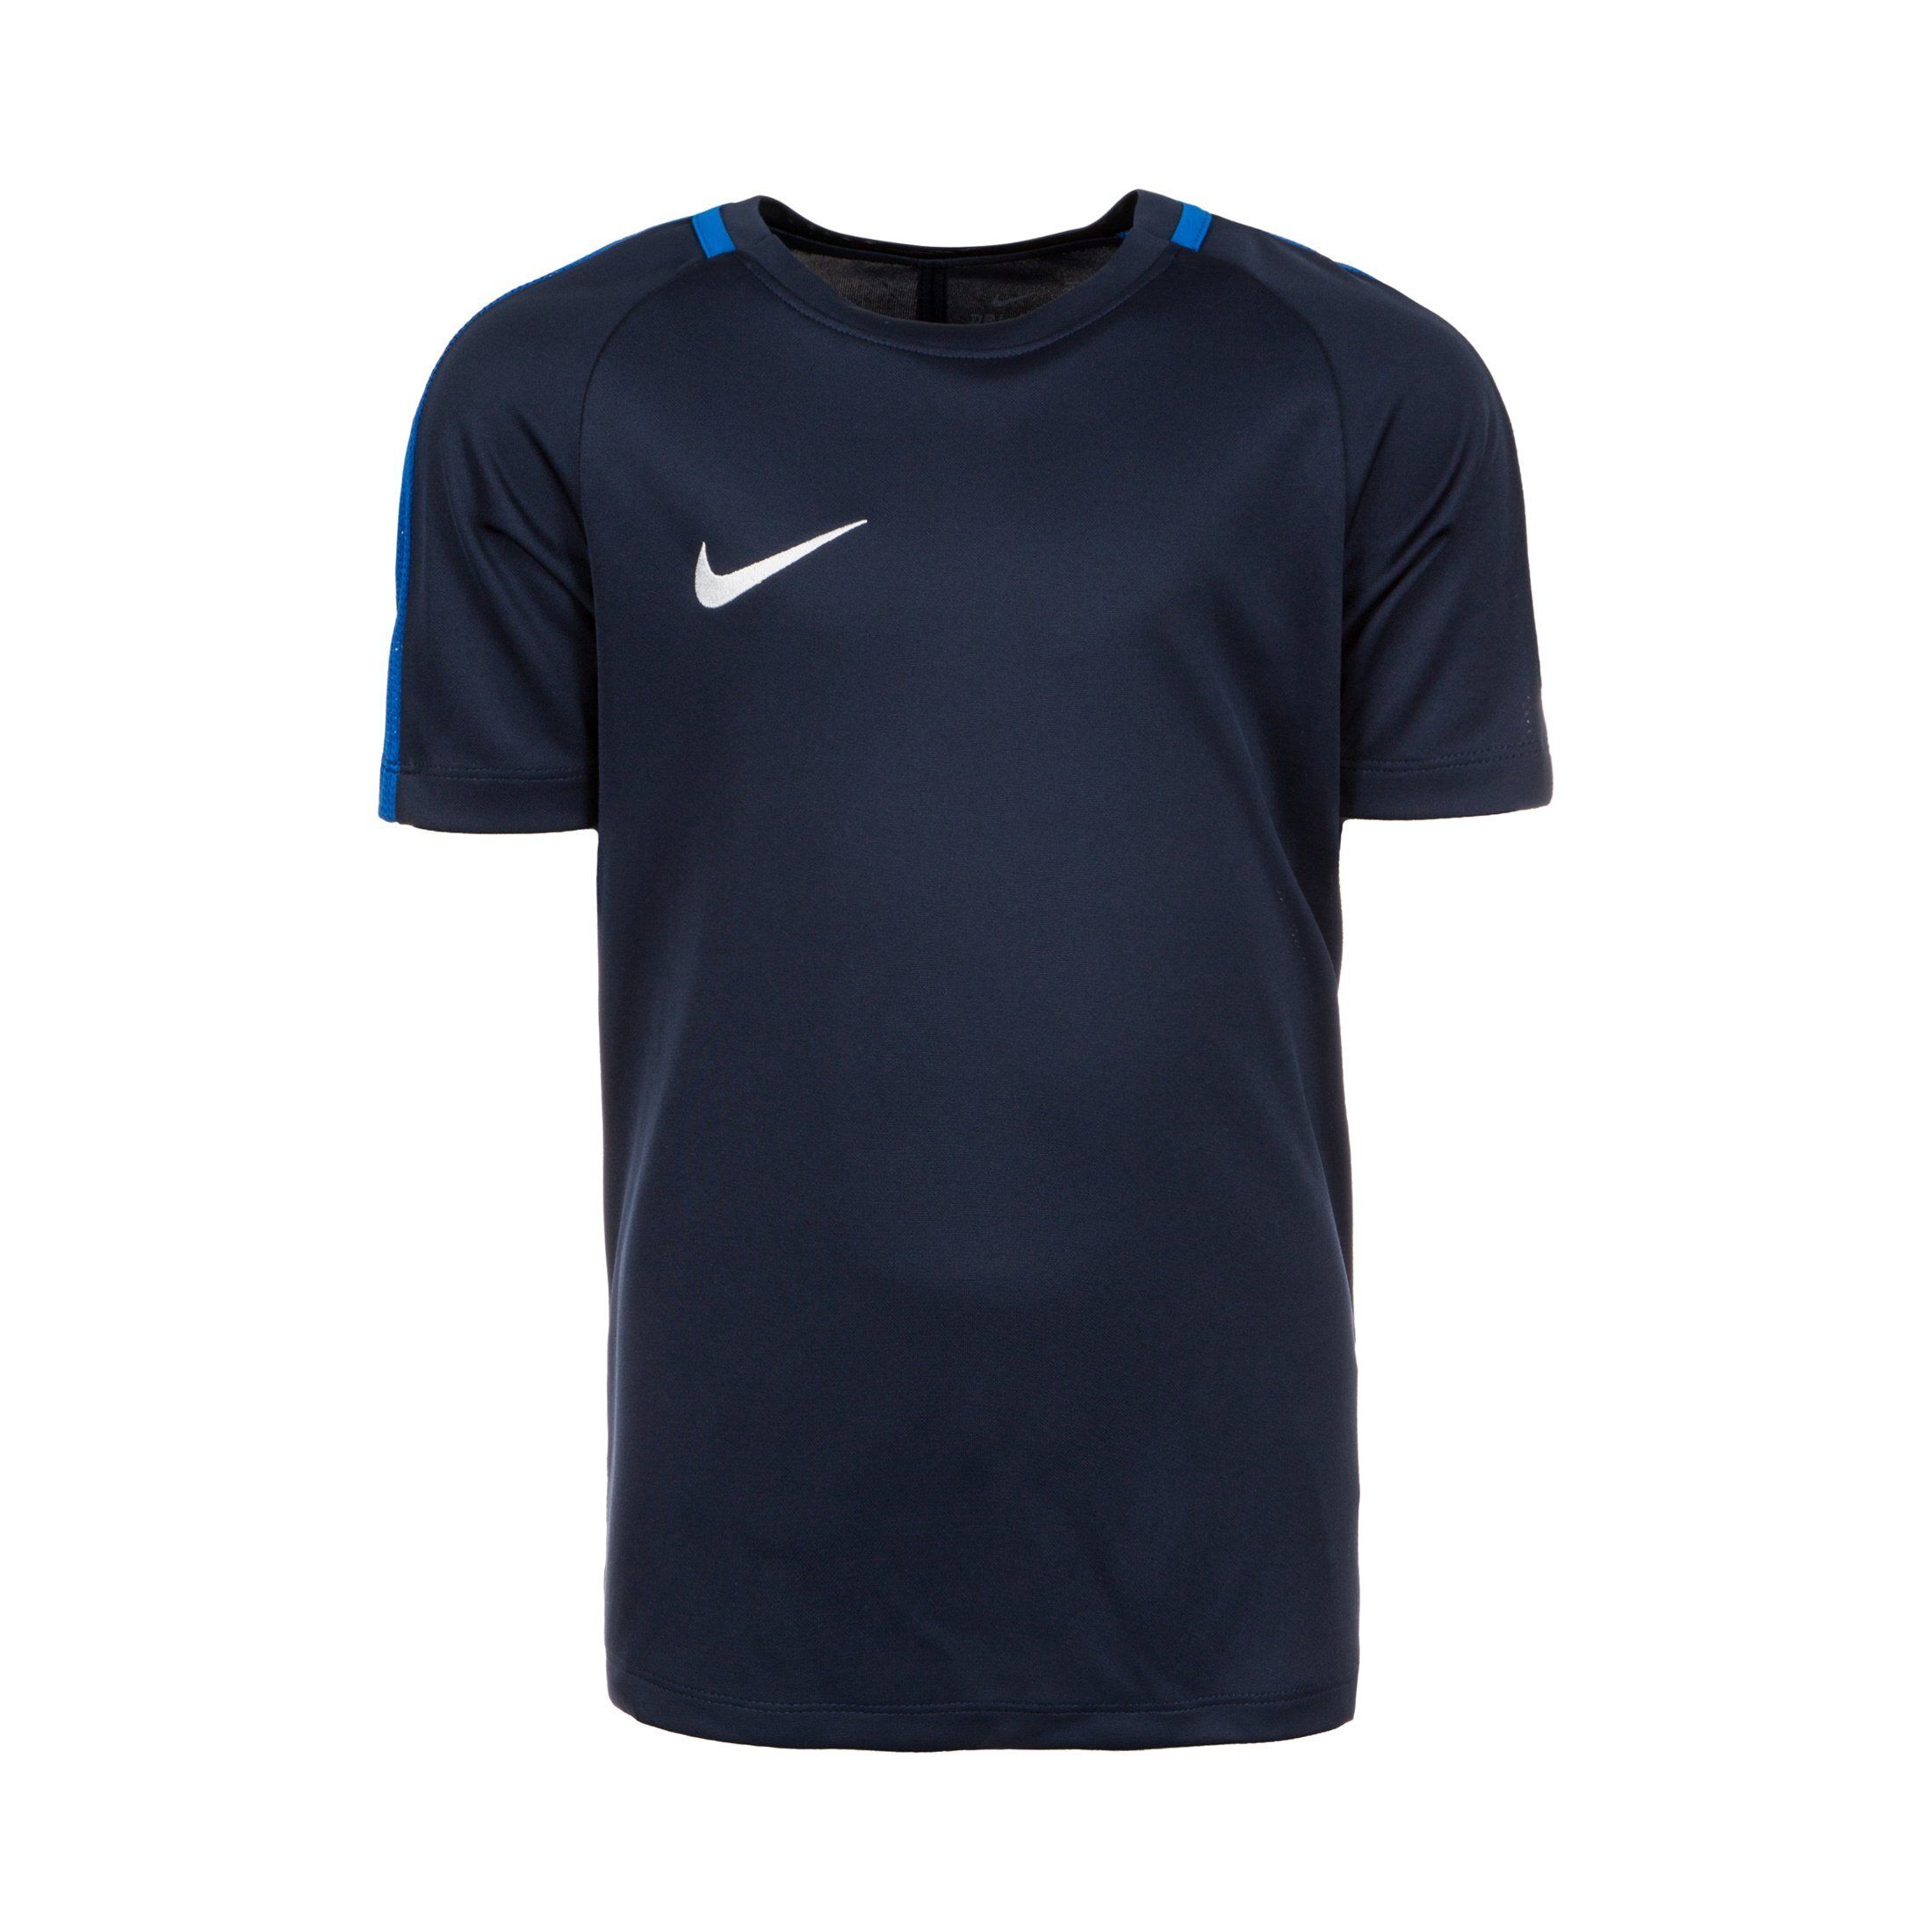 Nike Trainingsshirt »Dry Academy 18«, dunkelblau